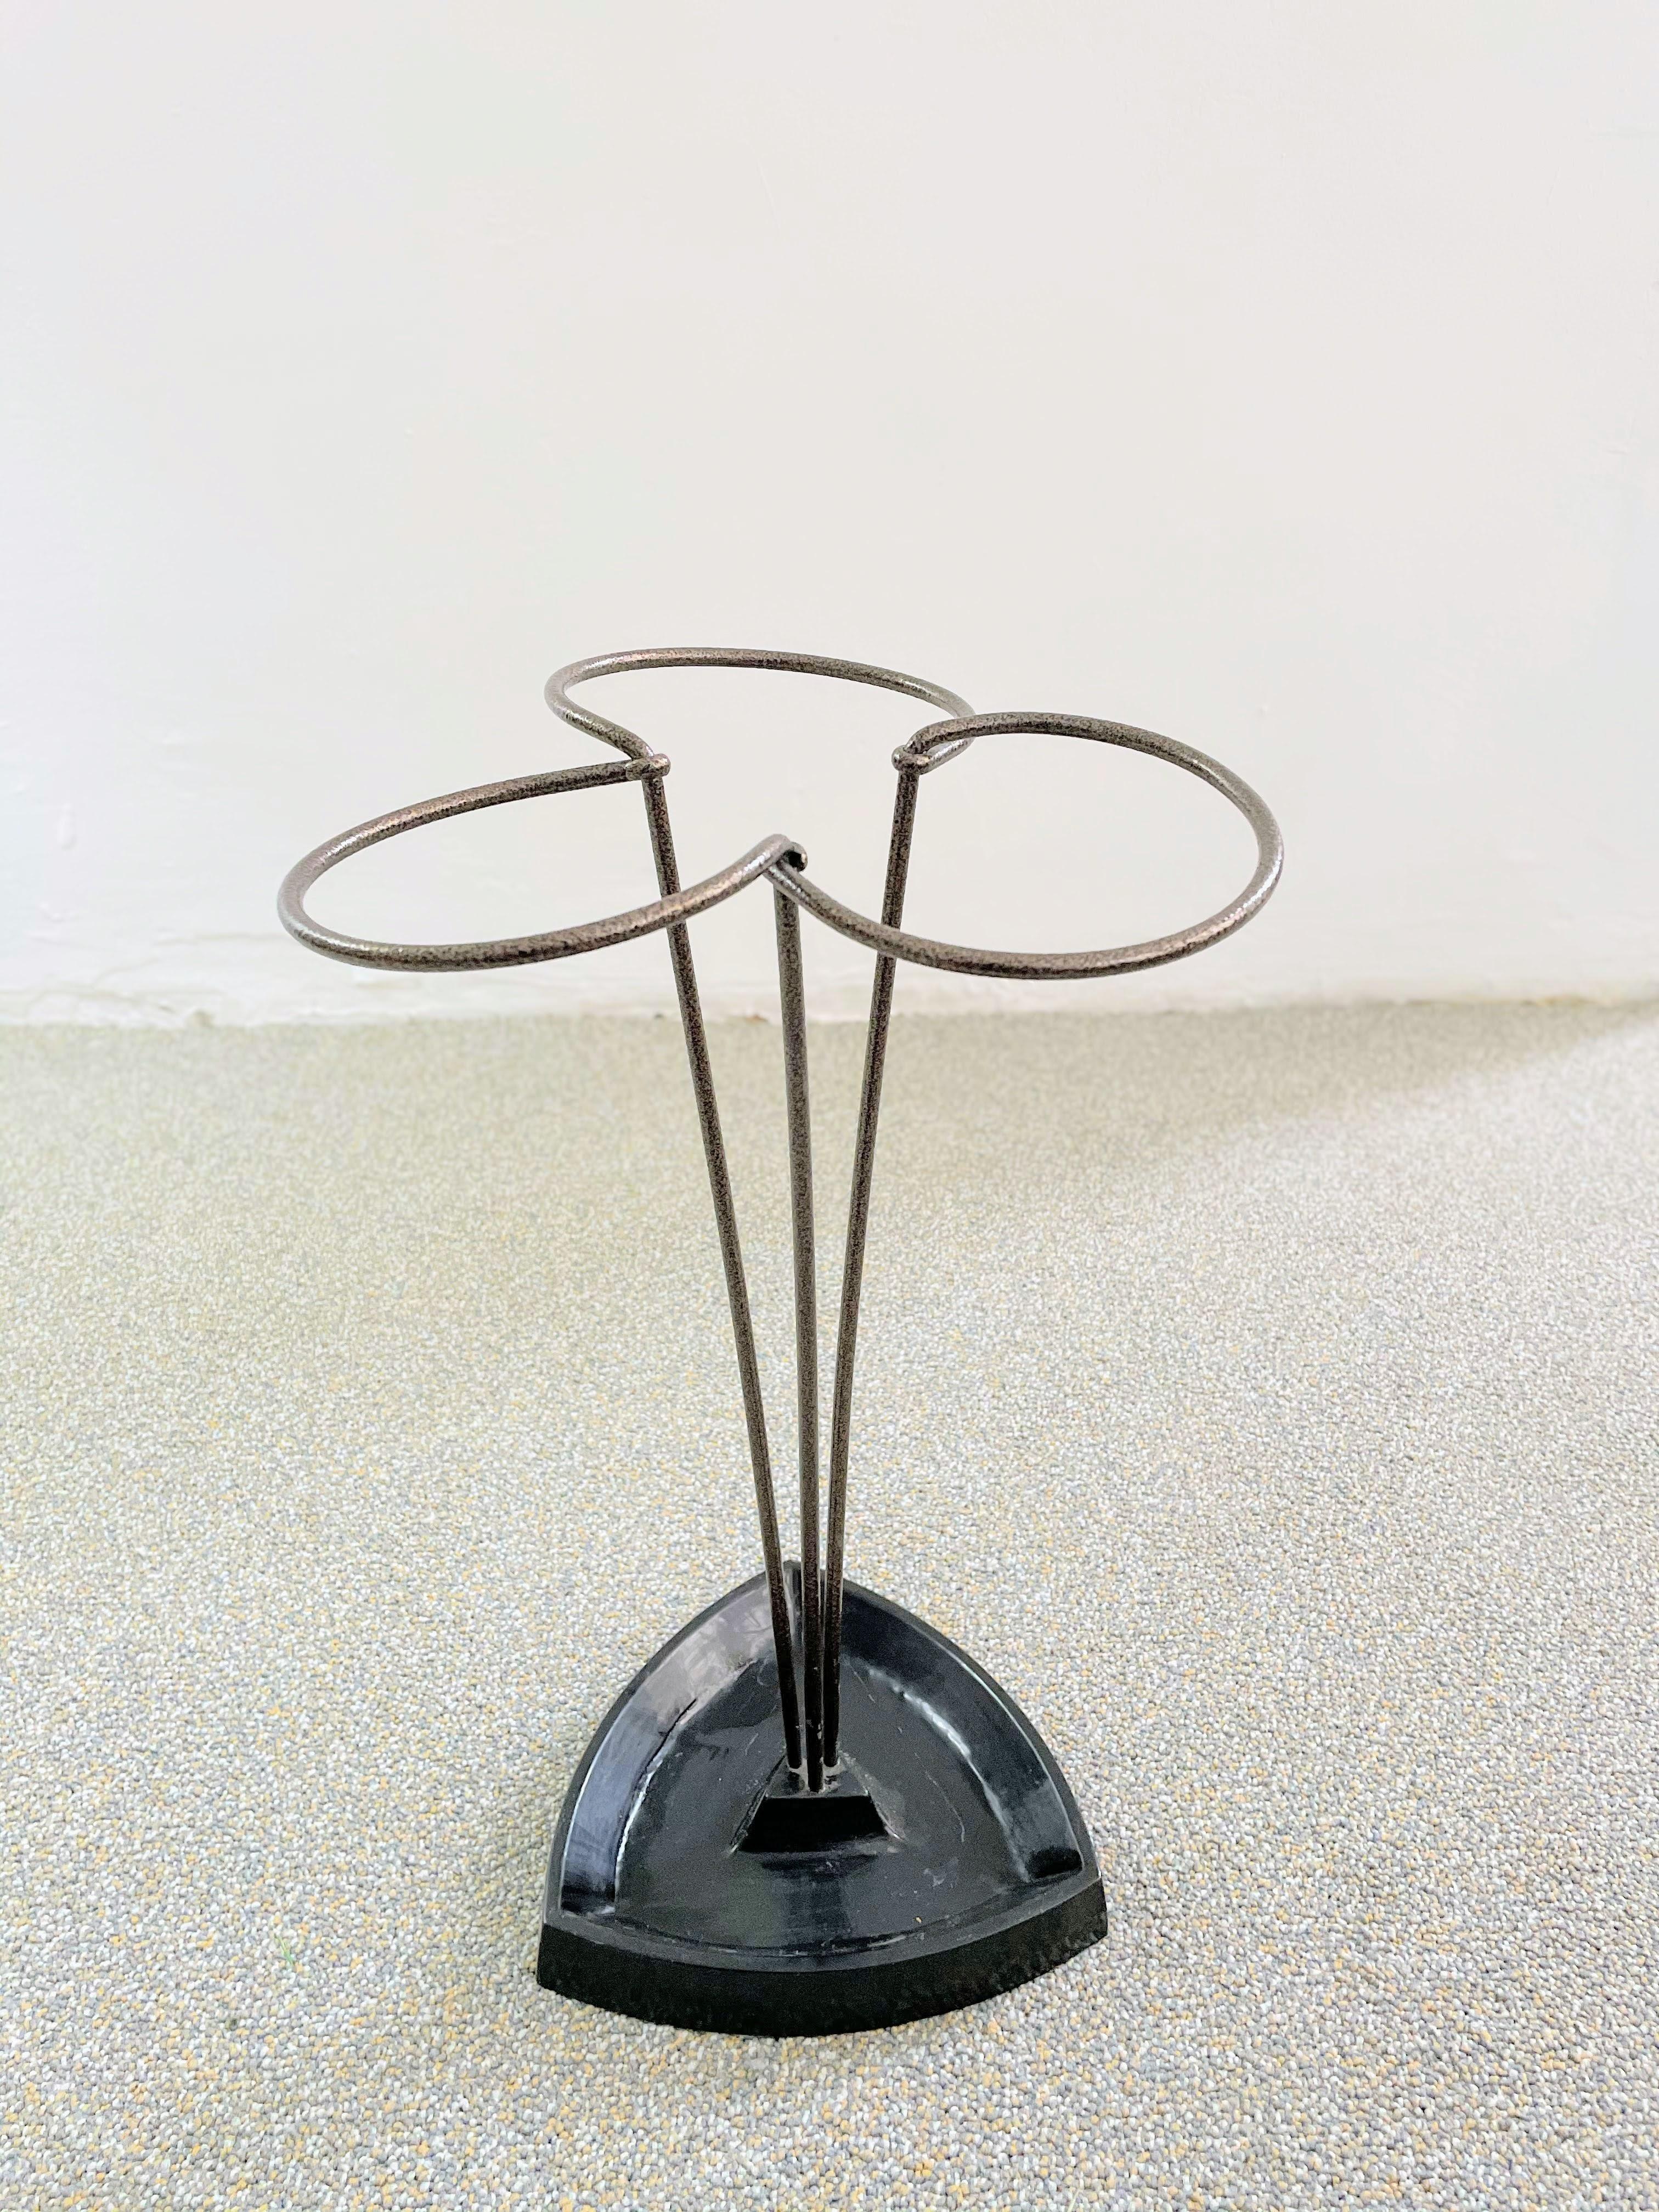 This elegant vintage midcentury umbrella stand was designed and manufactured in Austria in the 1950s.
 
   